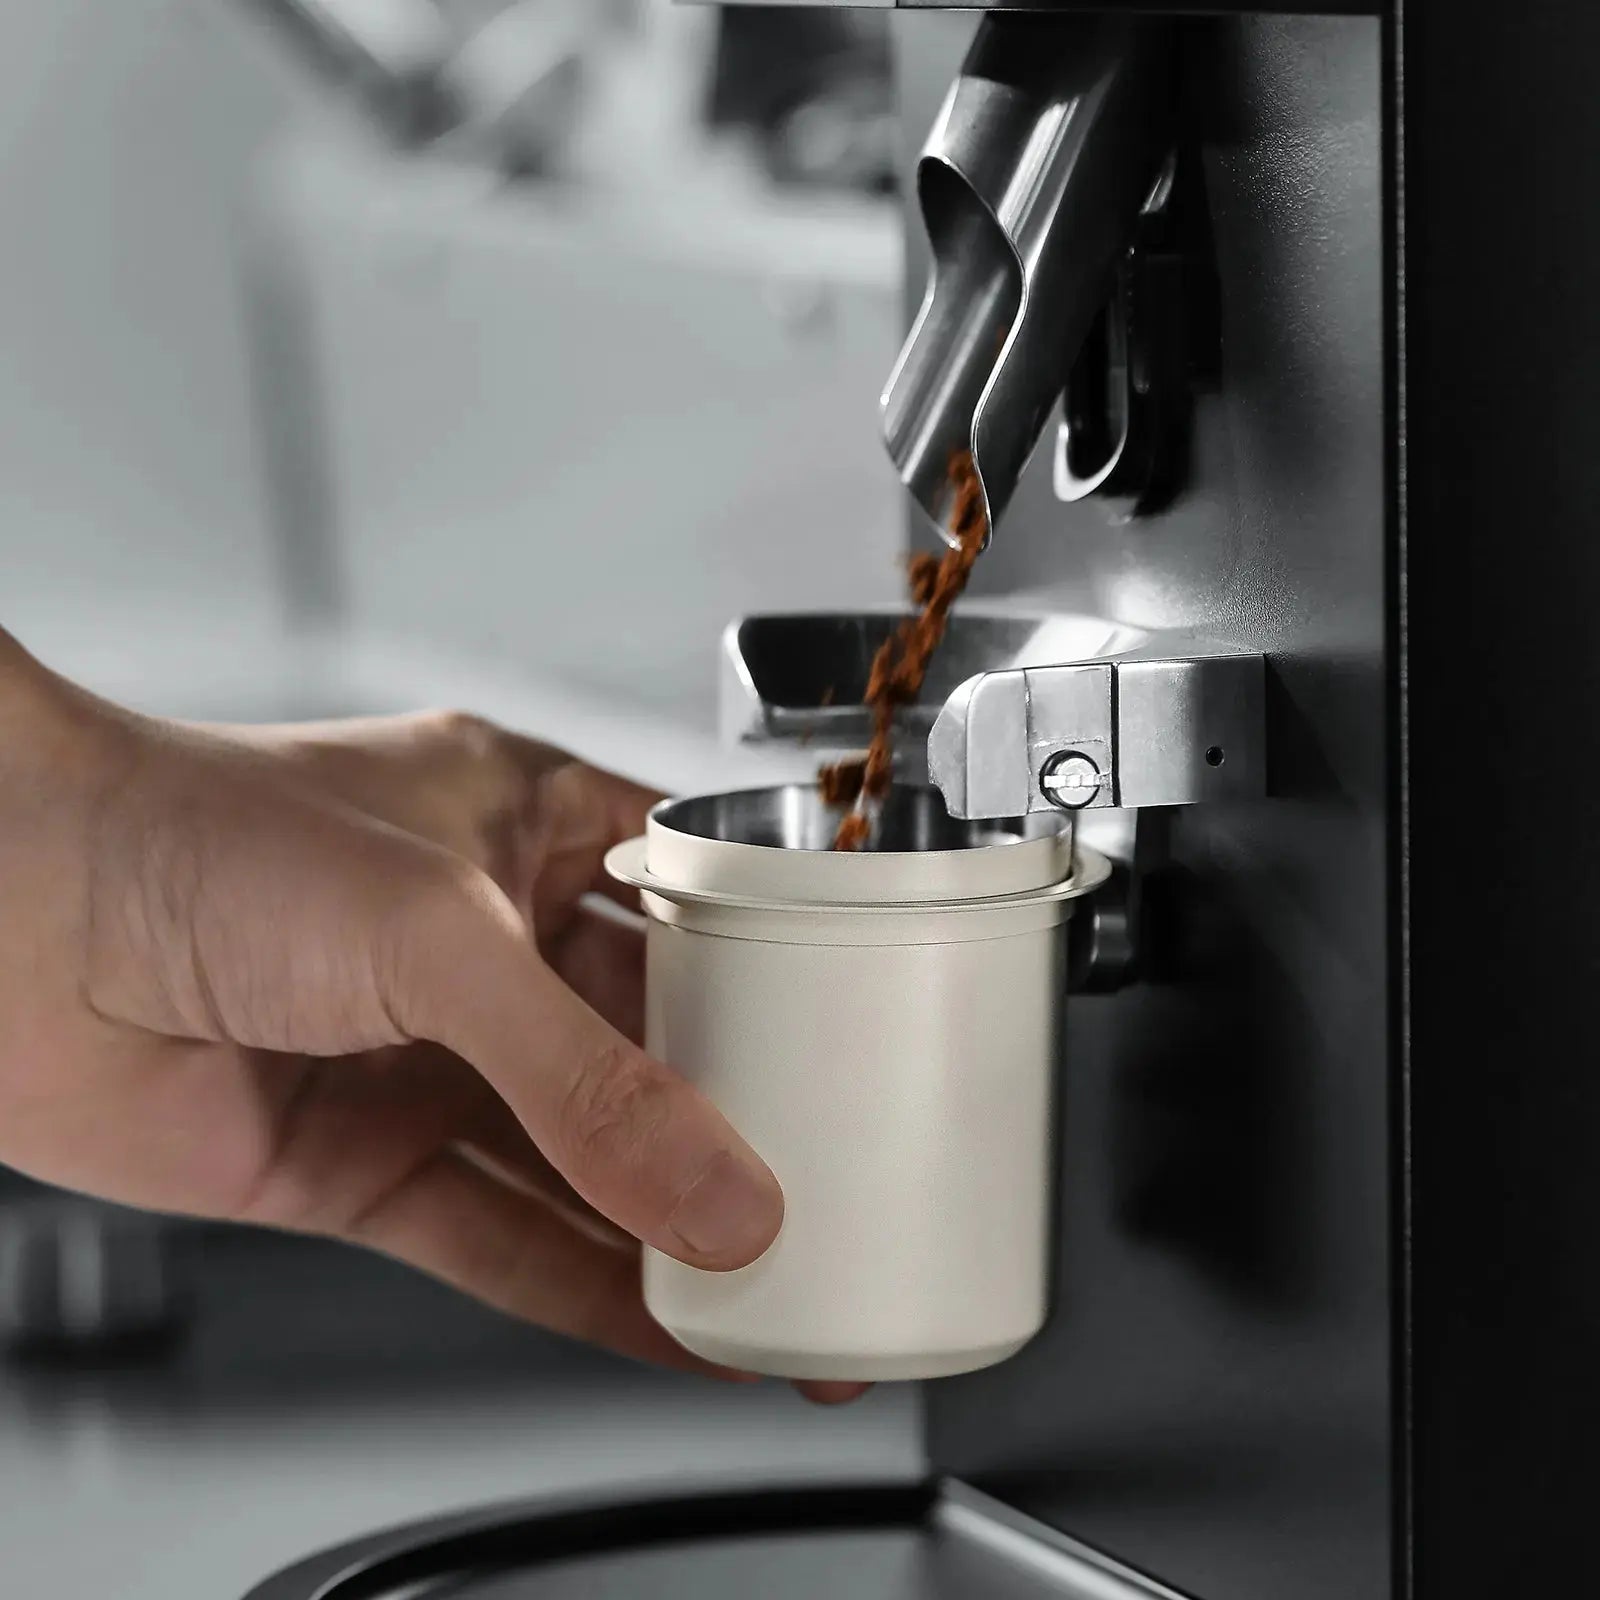 MHW-3BOMBER Coffee Grinder Cleaning Brush Walnut Handle Espresso